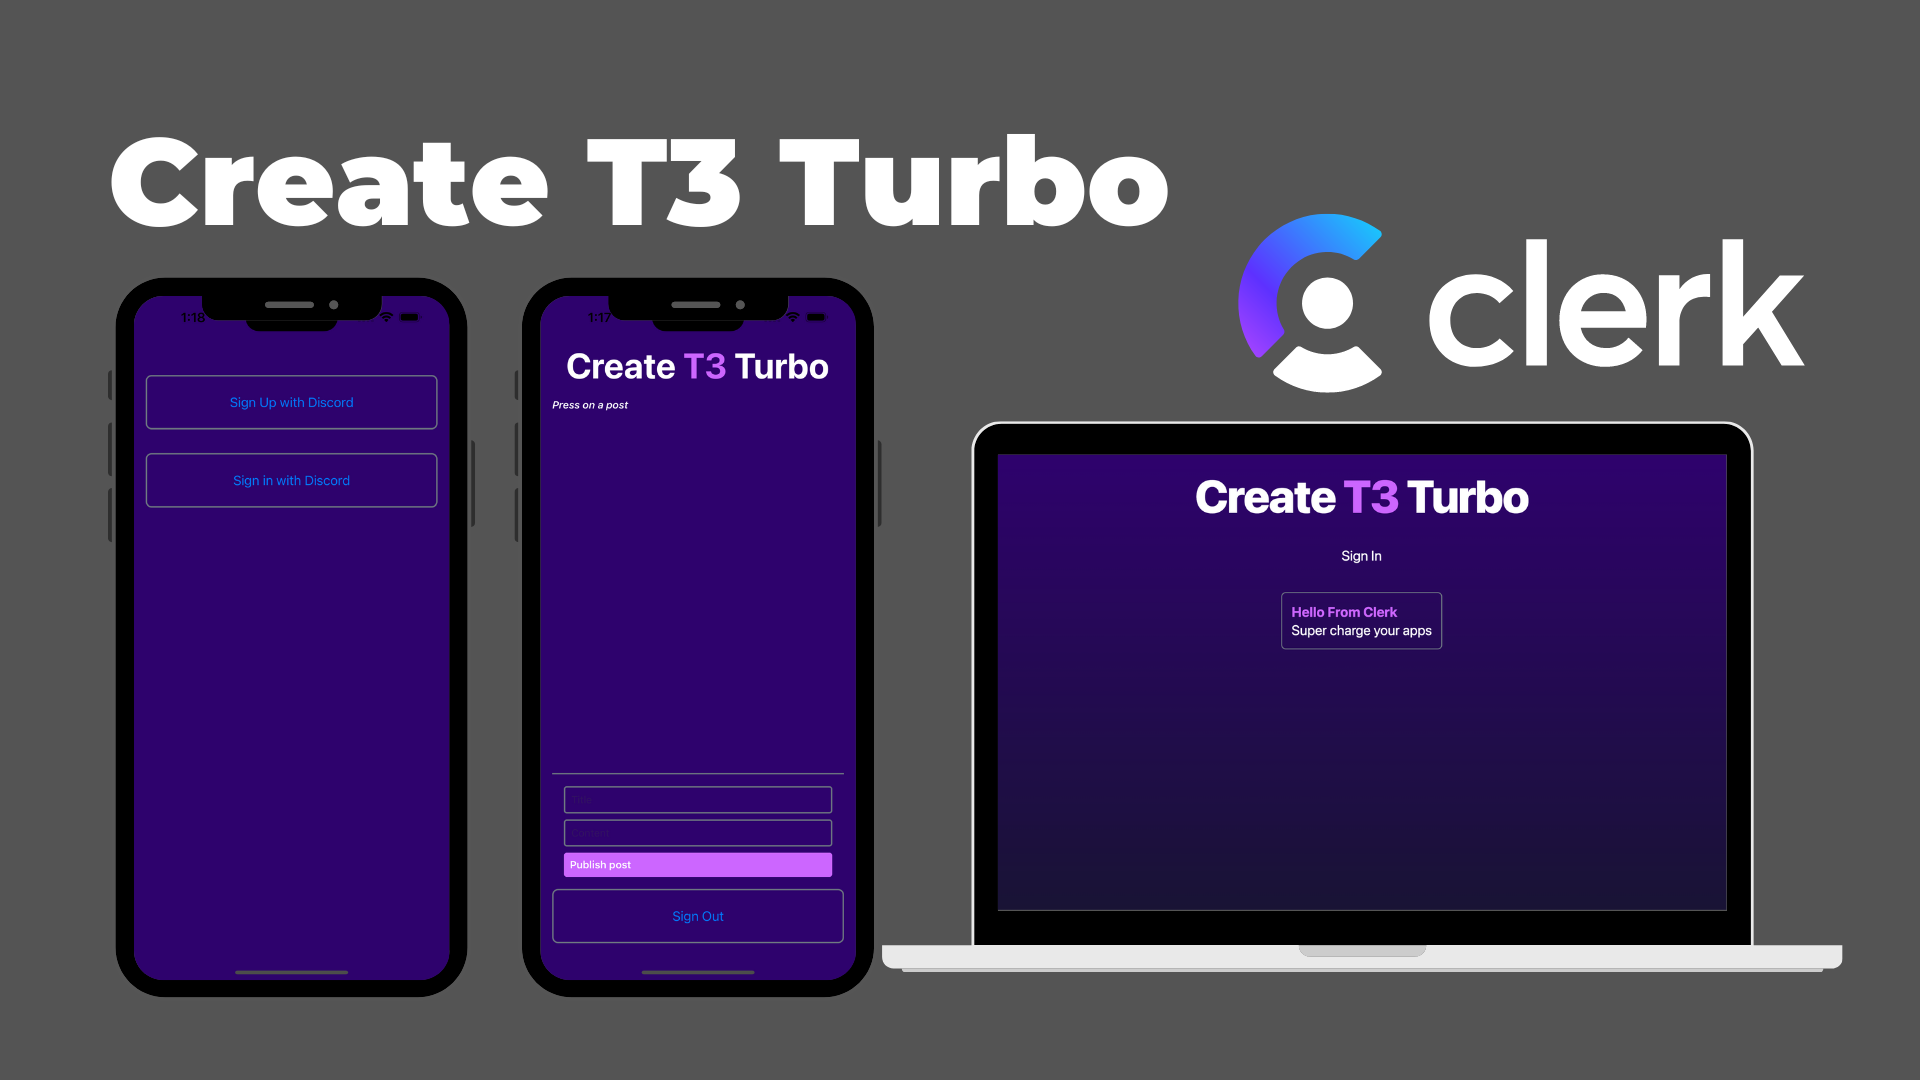 Clerk and Create T3 Turbo